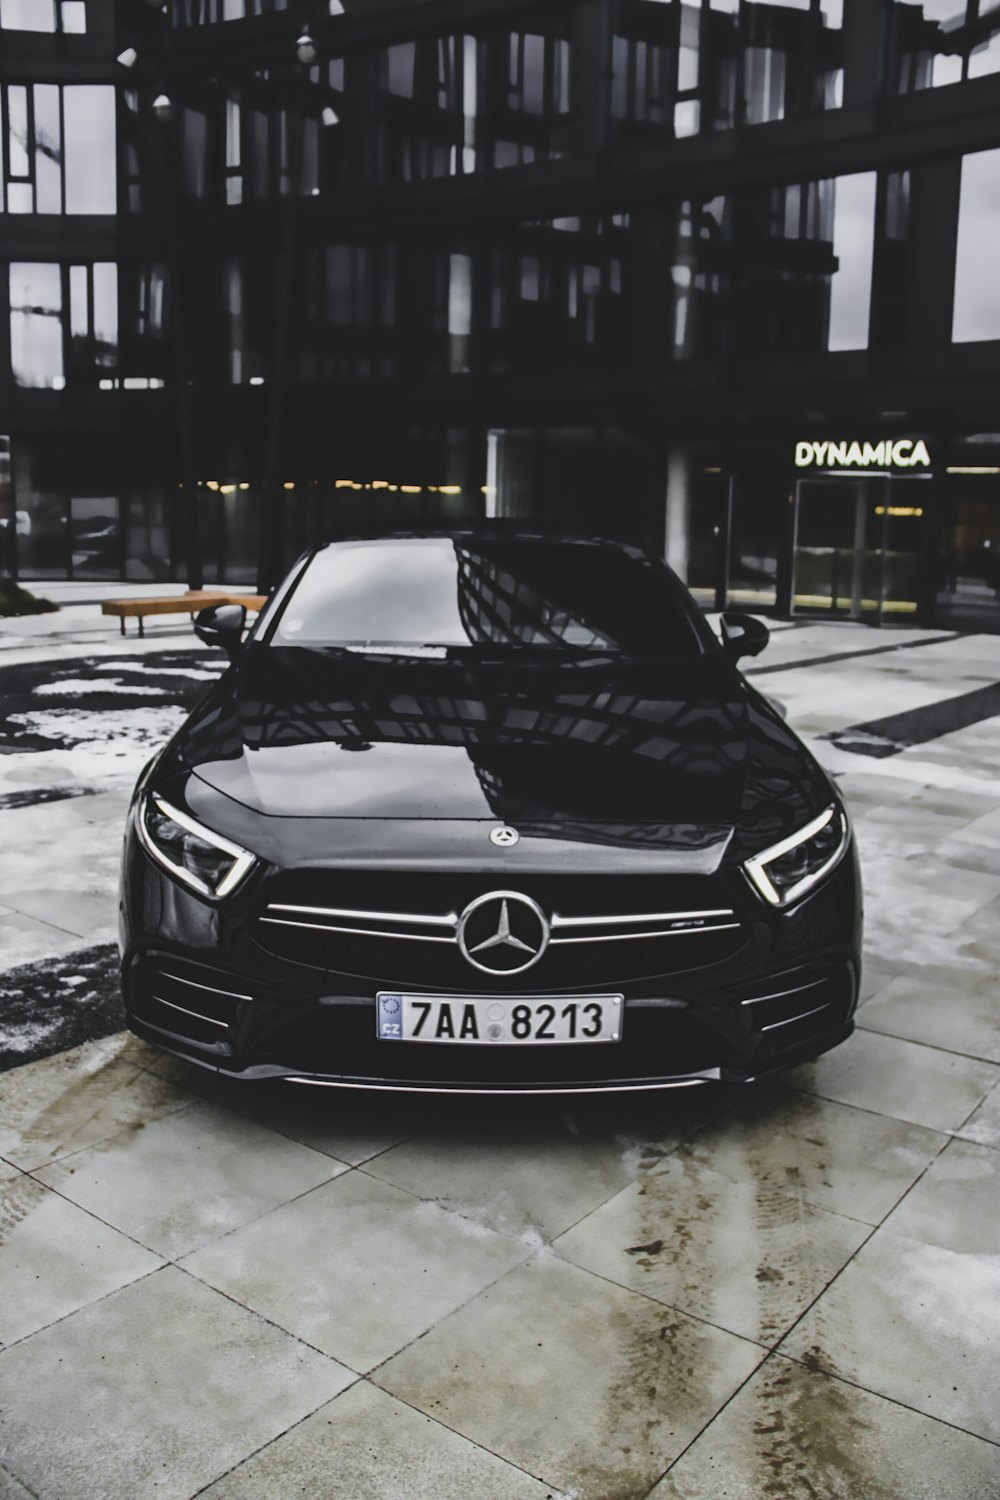 black Mercedes-Benz vehicle parked outside Dynamica building